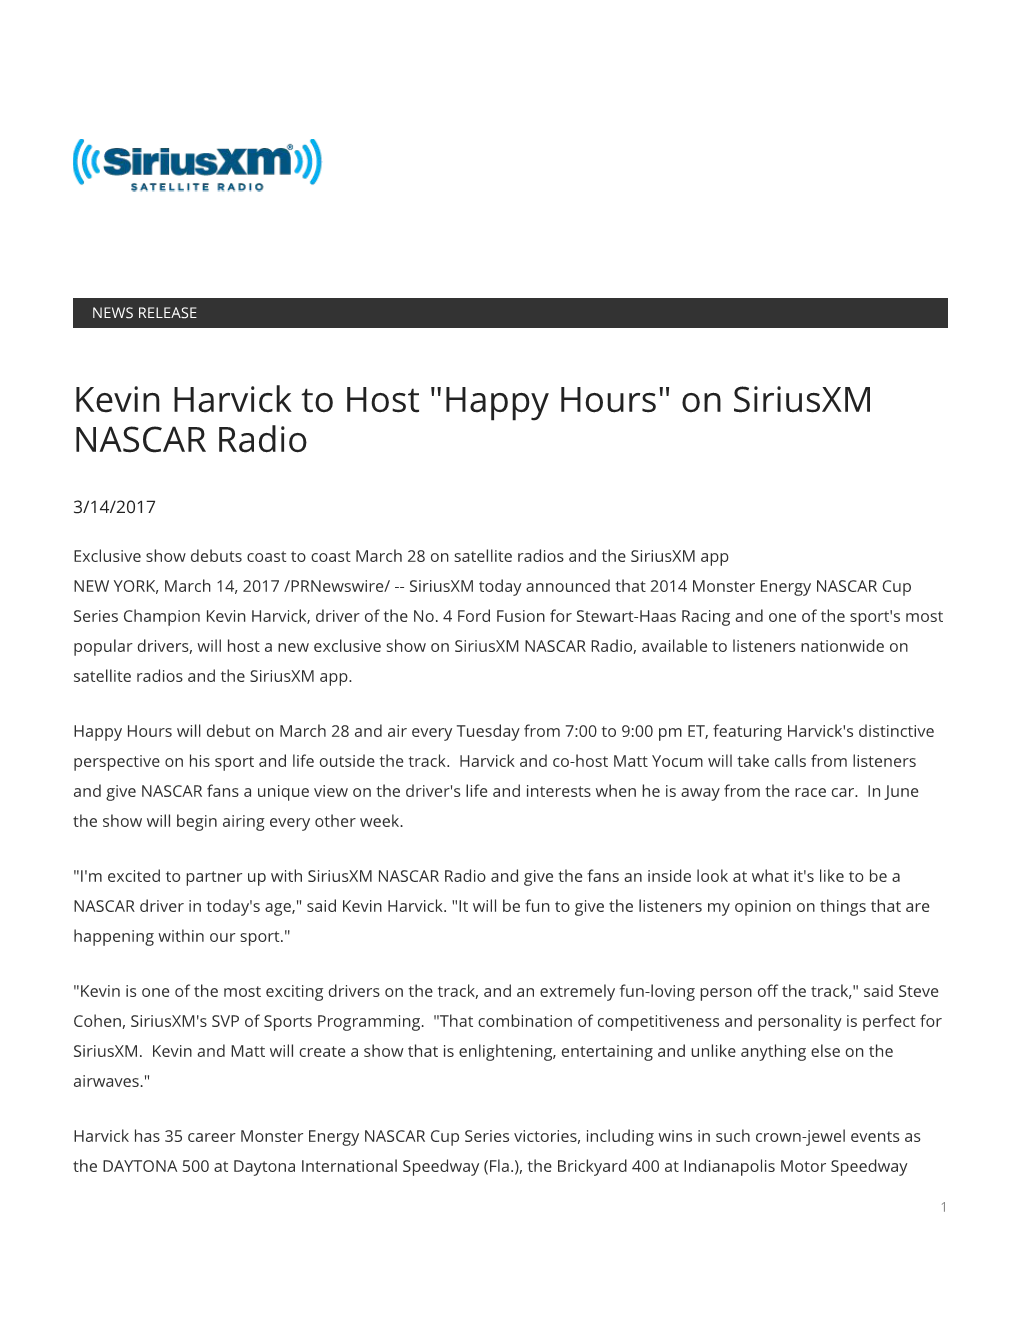 Kevin Harvick to Host "Happy Hours" on Siriusxm NASCAR Radio